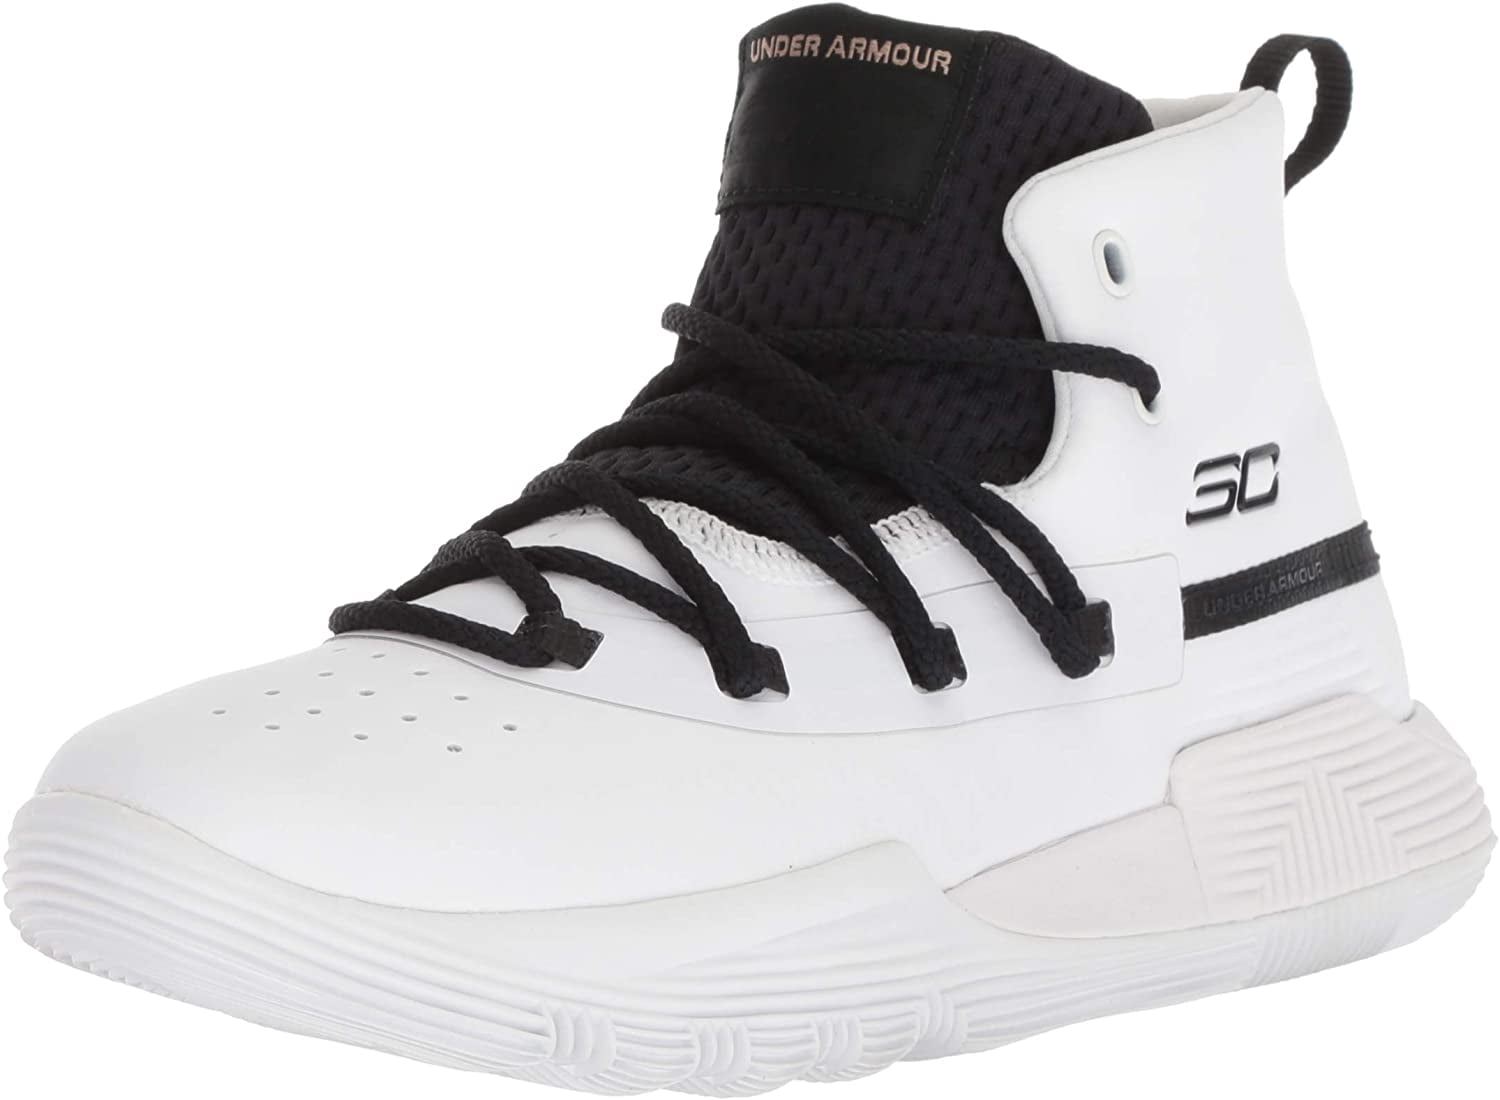 Under Armour Boys' Pre School SC 3Zer0 II Basketball Shoe, White (100 ...